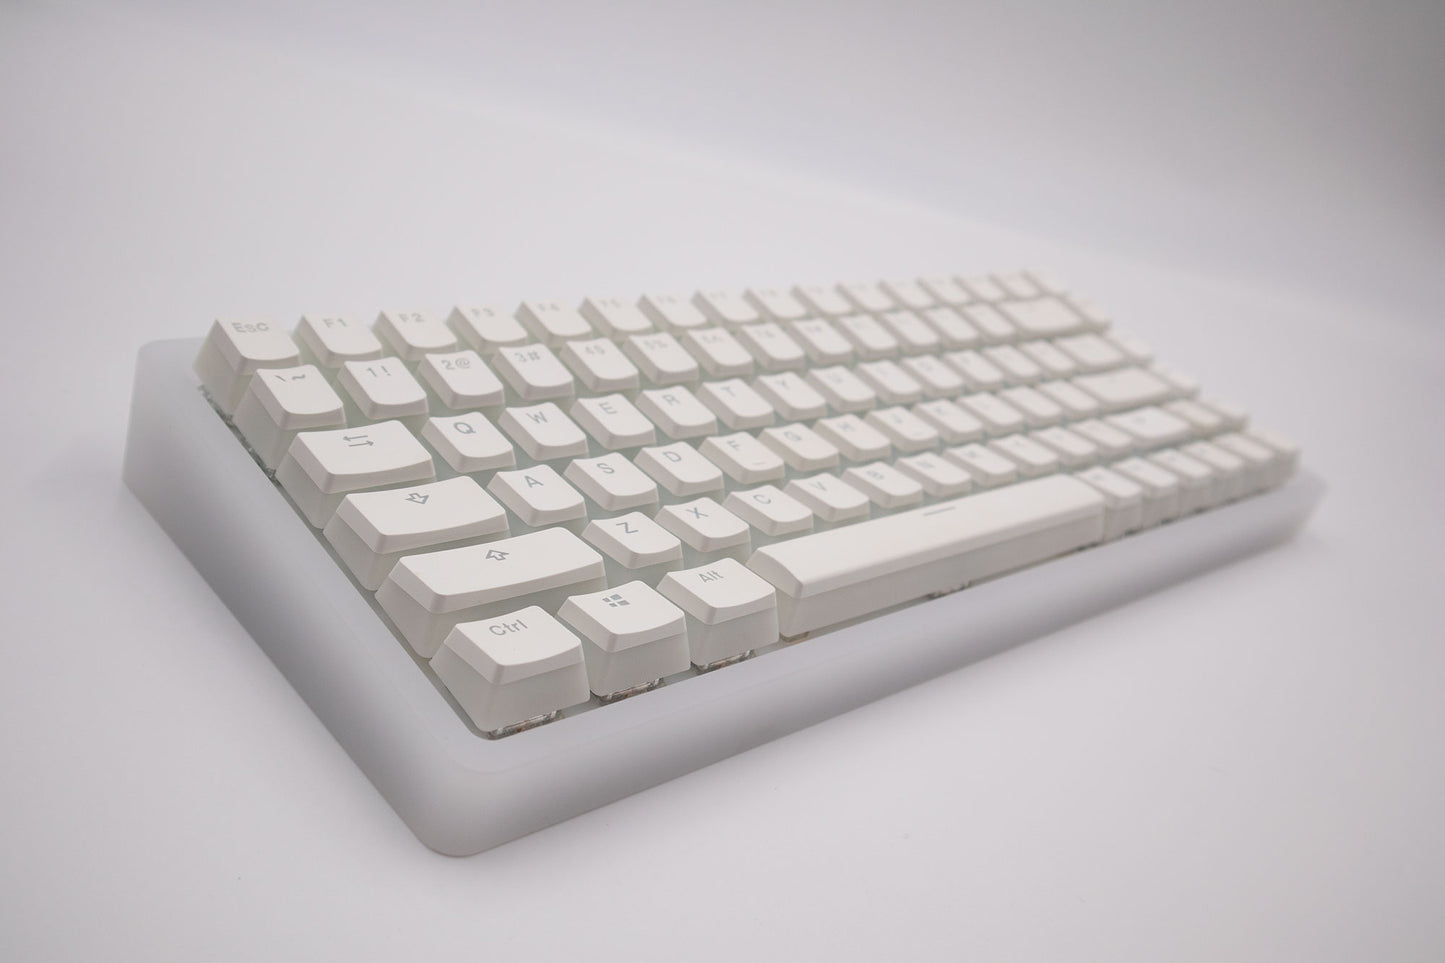 
                  
                    Custom Built Marsback M1 75% Keyboard
                  
                